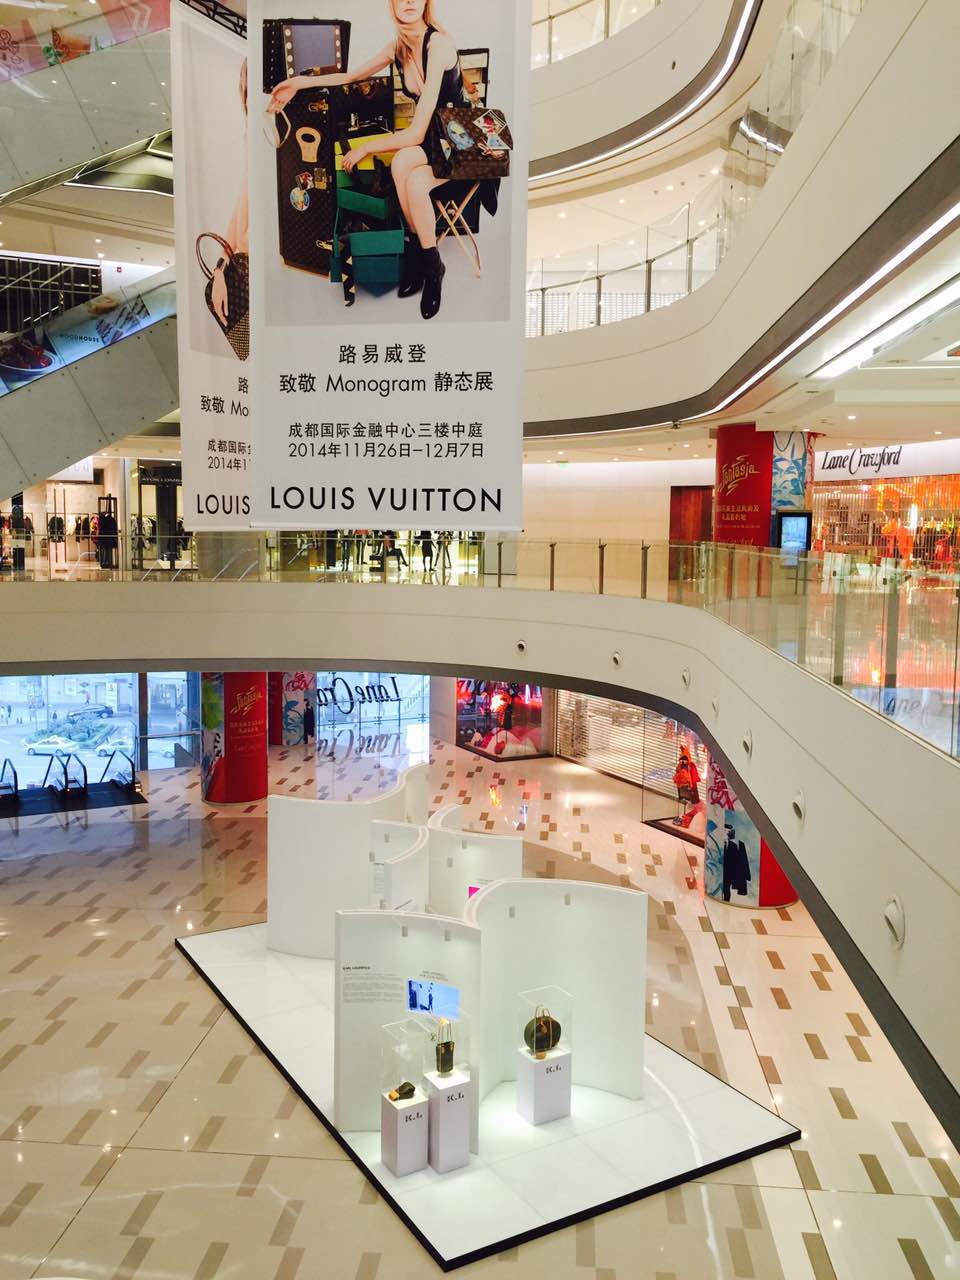 Louis Vuitton - Monogram Exhibition